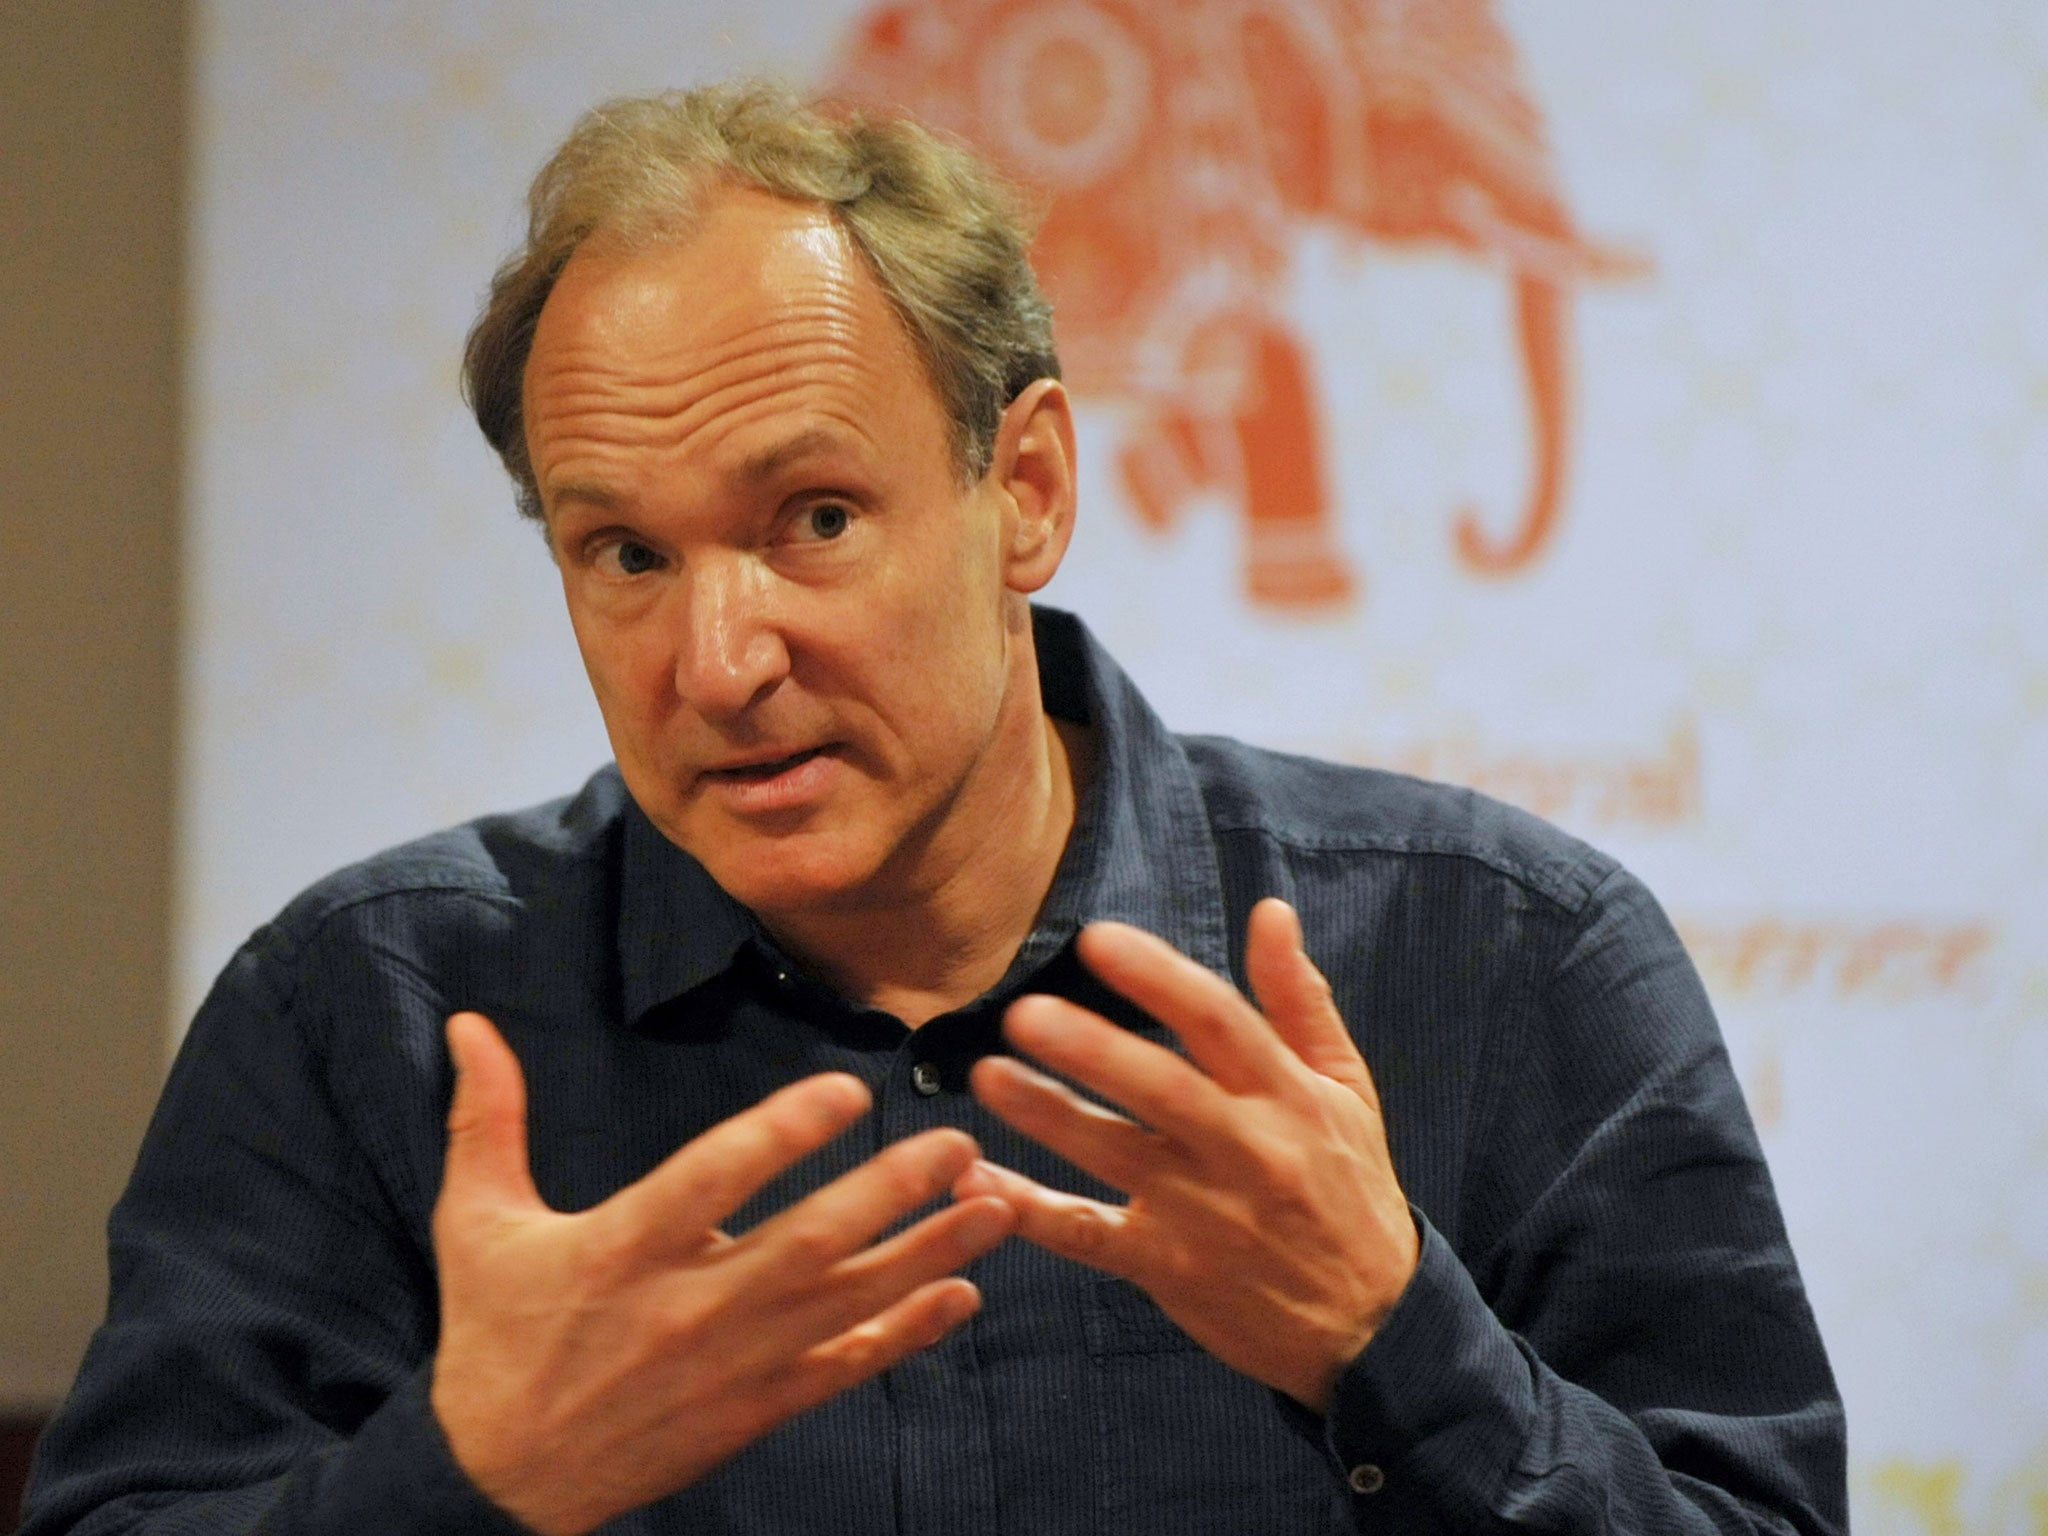 Sir Tim Berners-Lee said growing censorship is threatening democracy